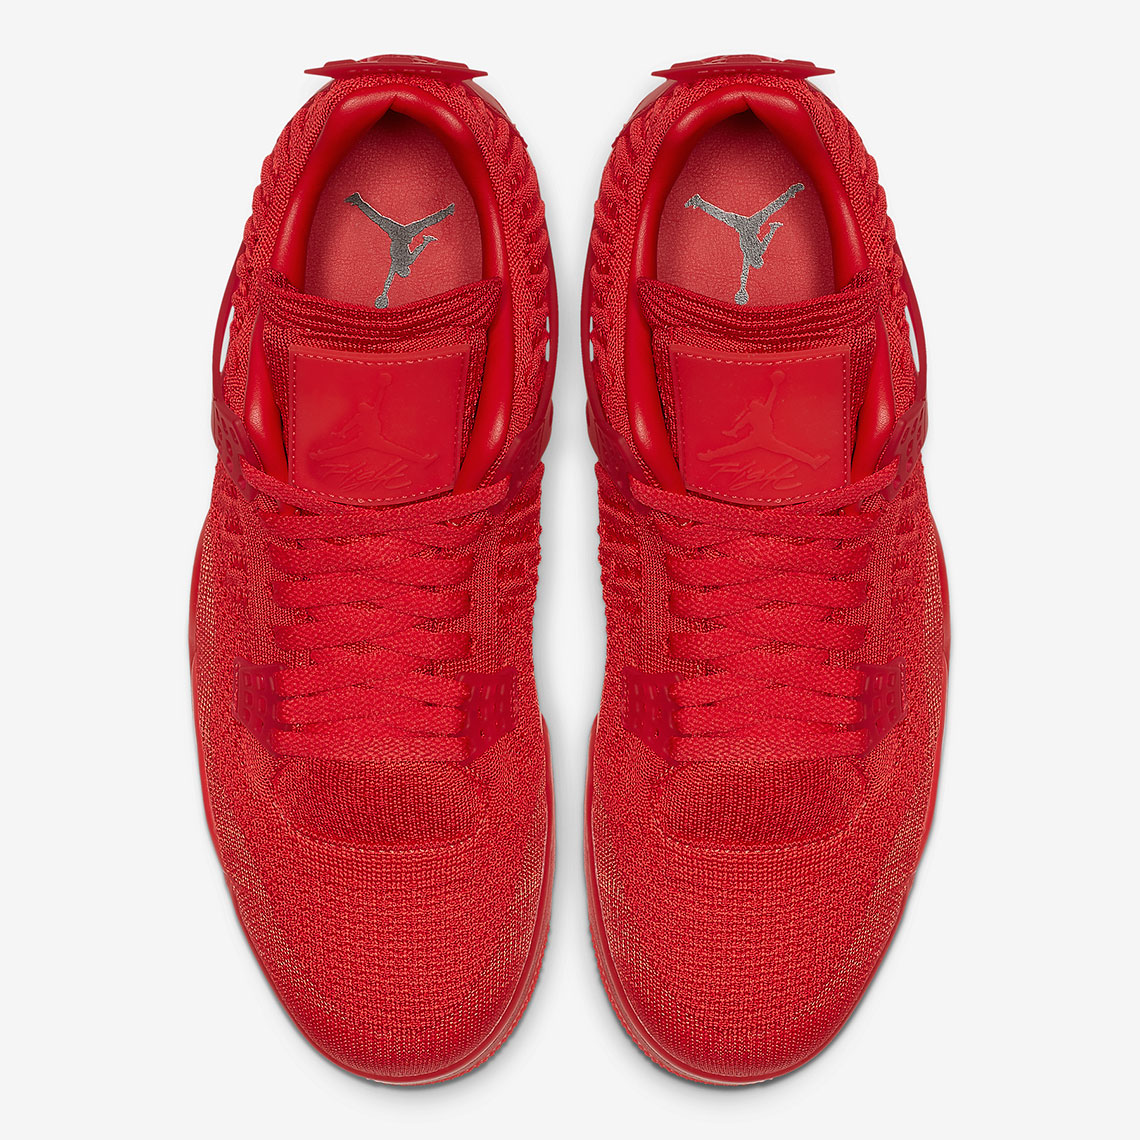 Air Jordan 4 Flyknit &quot;Red&quot; Drops Next Week: Official Photos